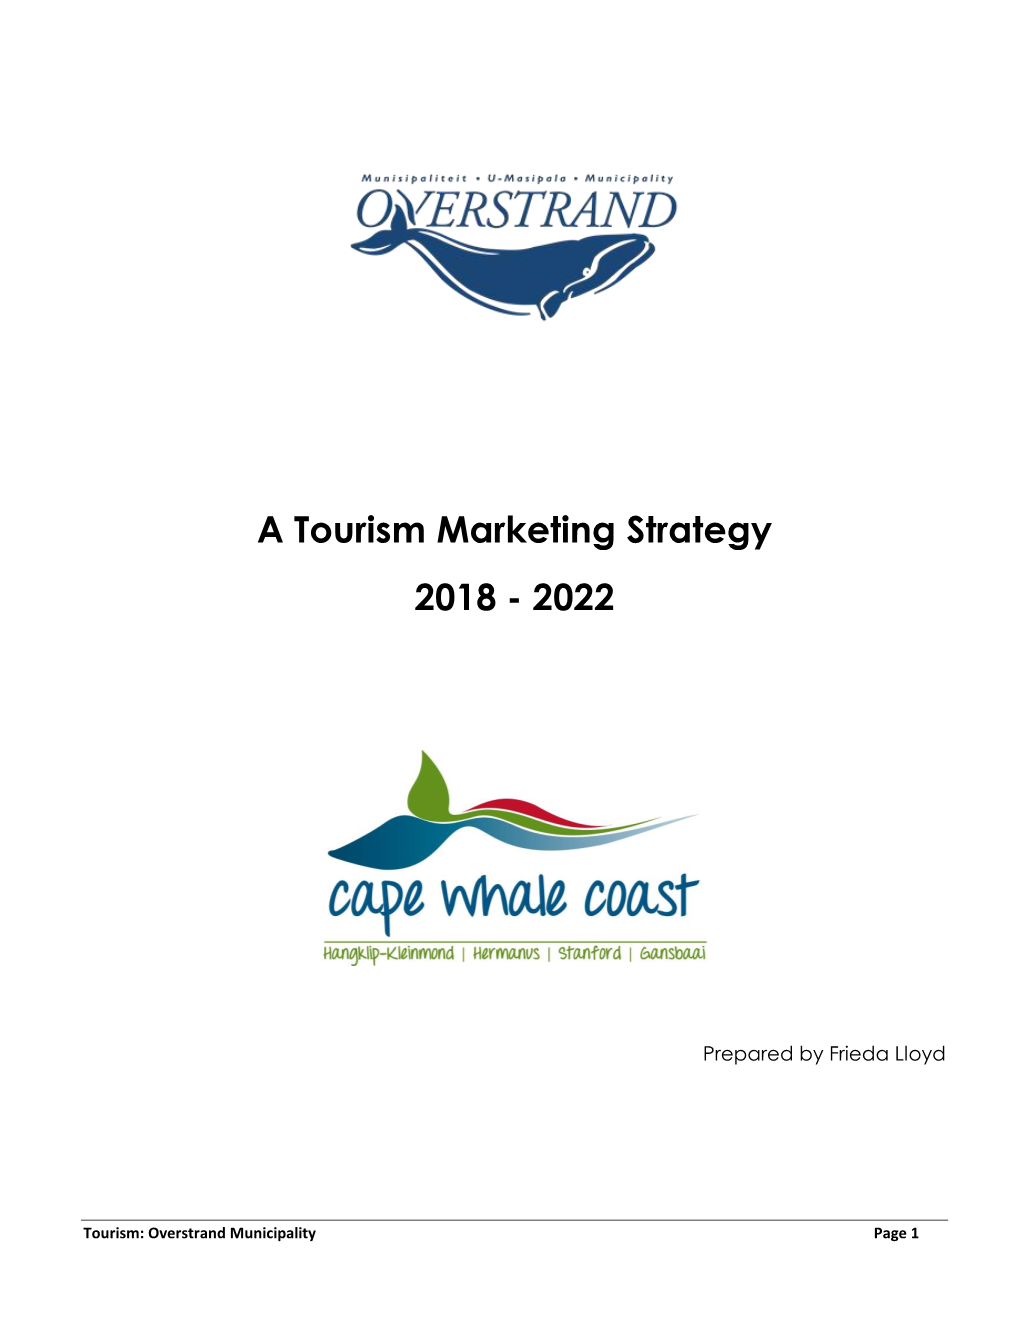 A Tourism Marketing Strategy 2018